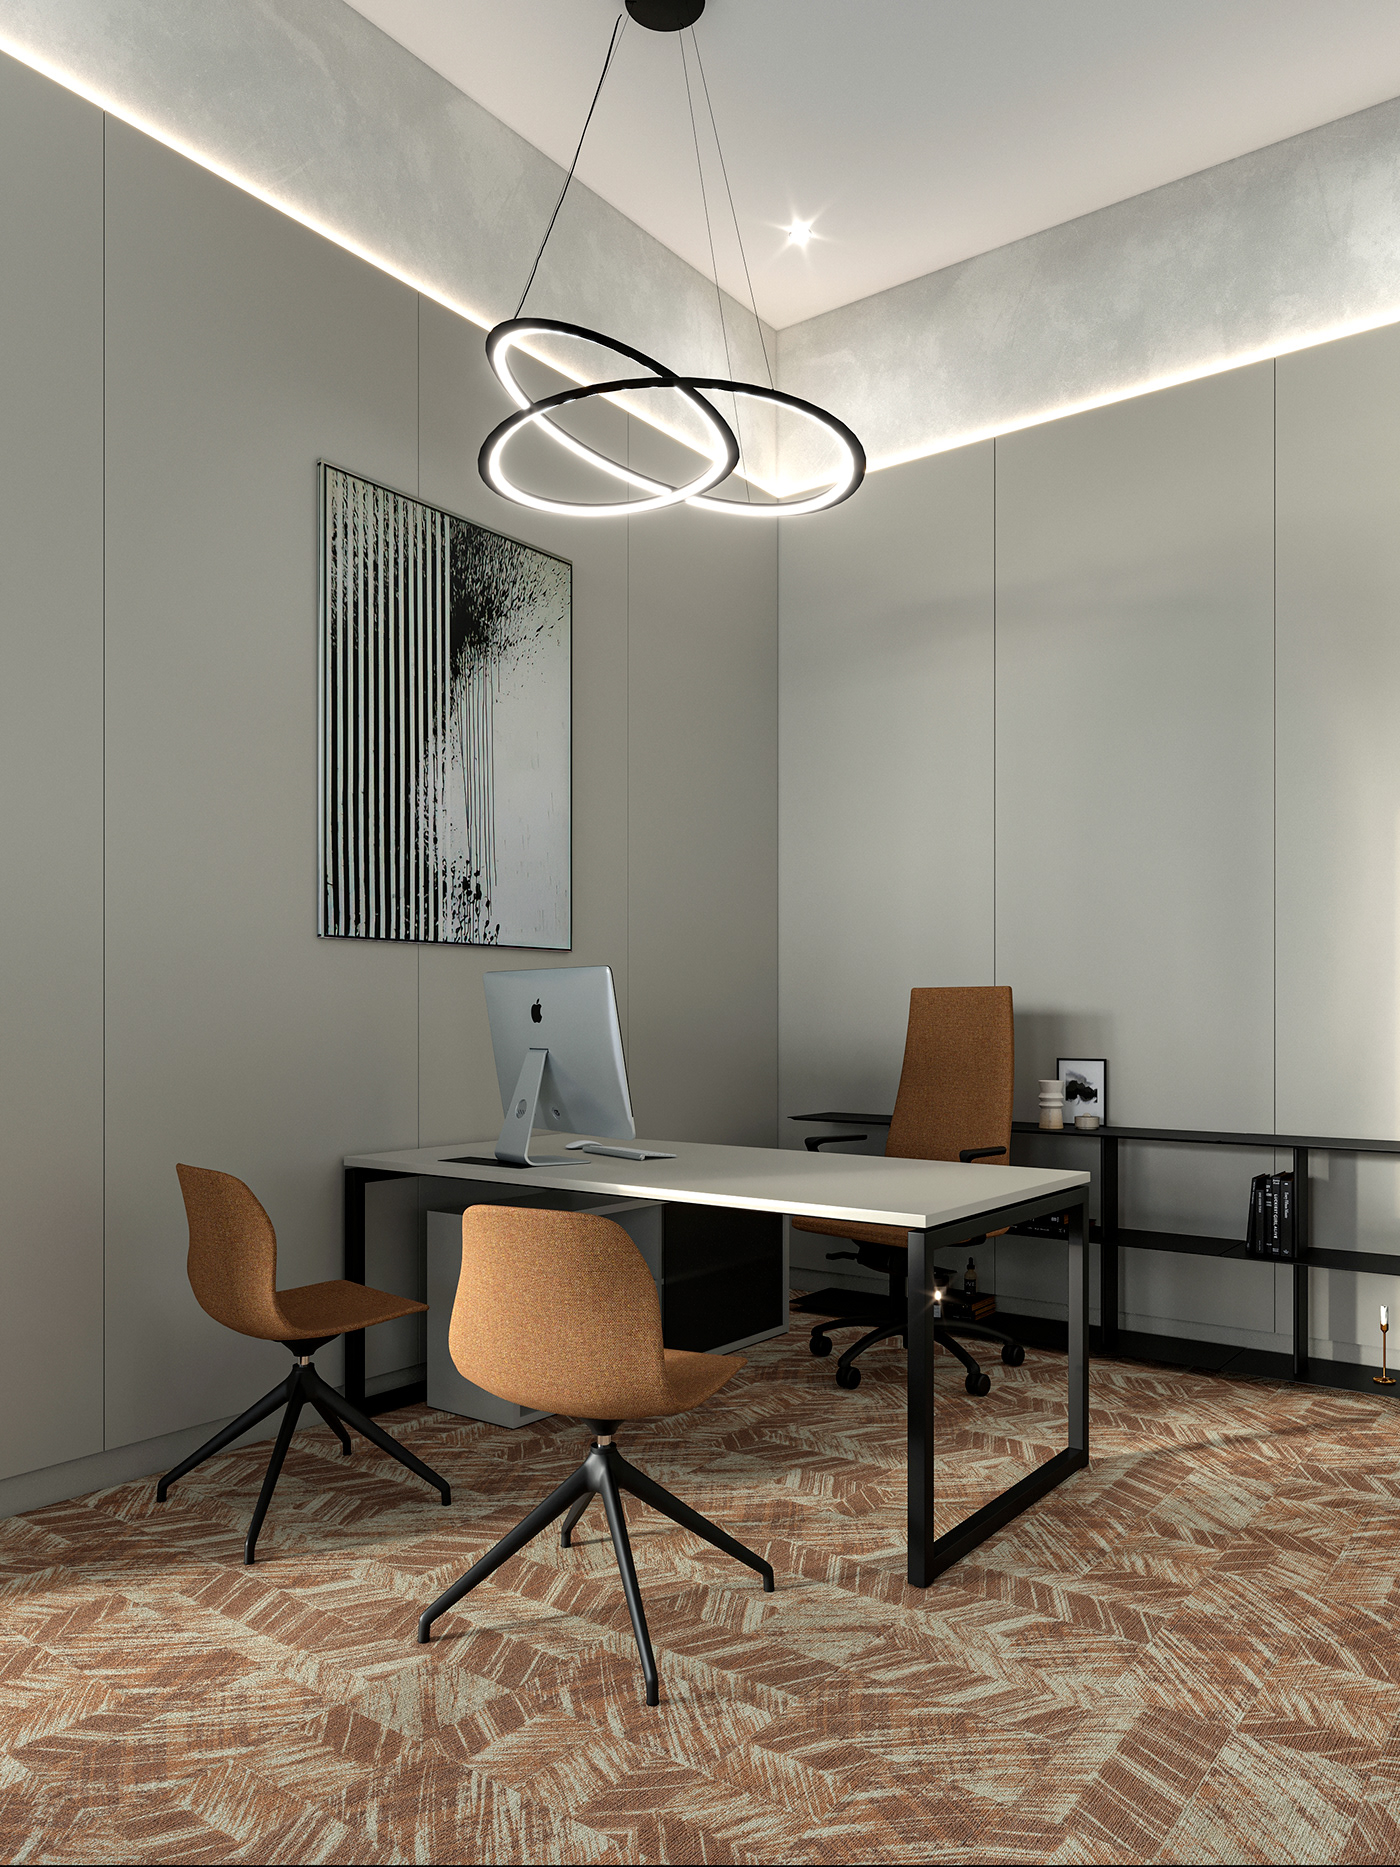 Office Office Design office furniture 3ds max CGI visualization corona interior design  Render archviz